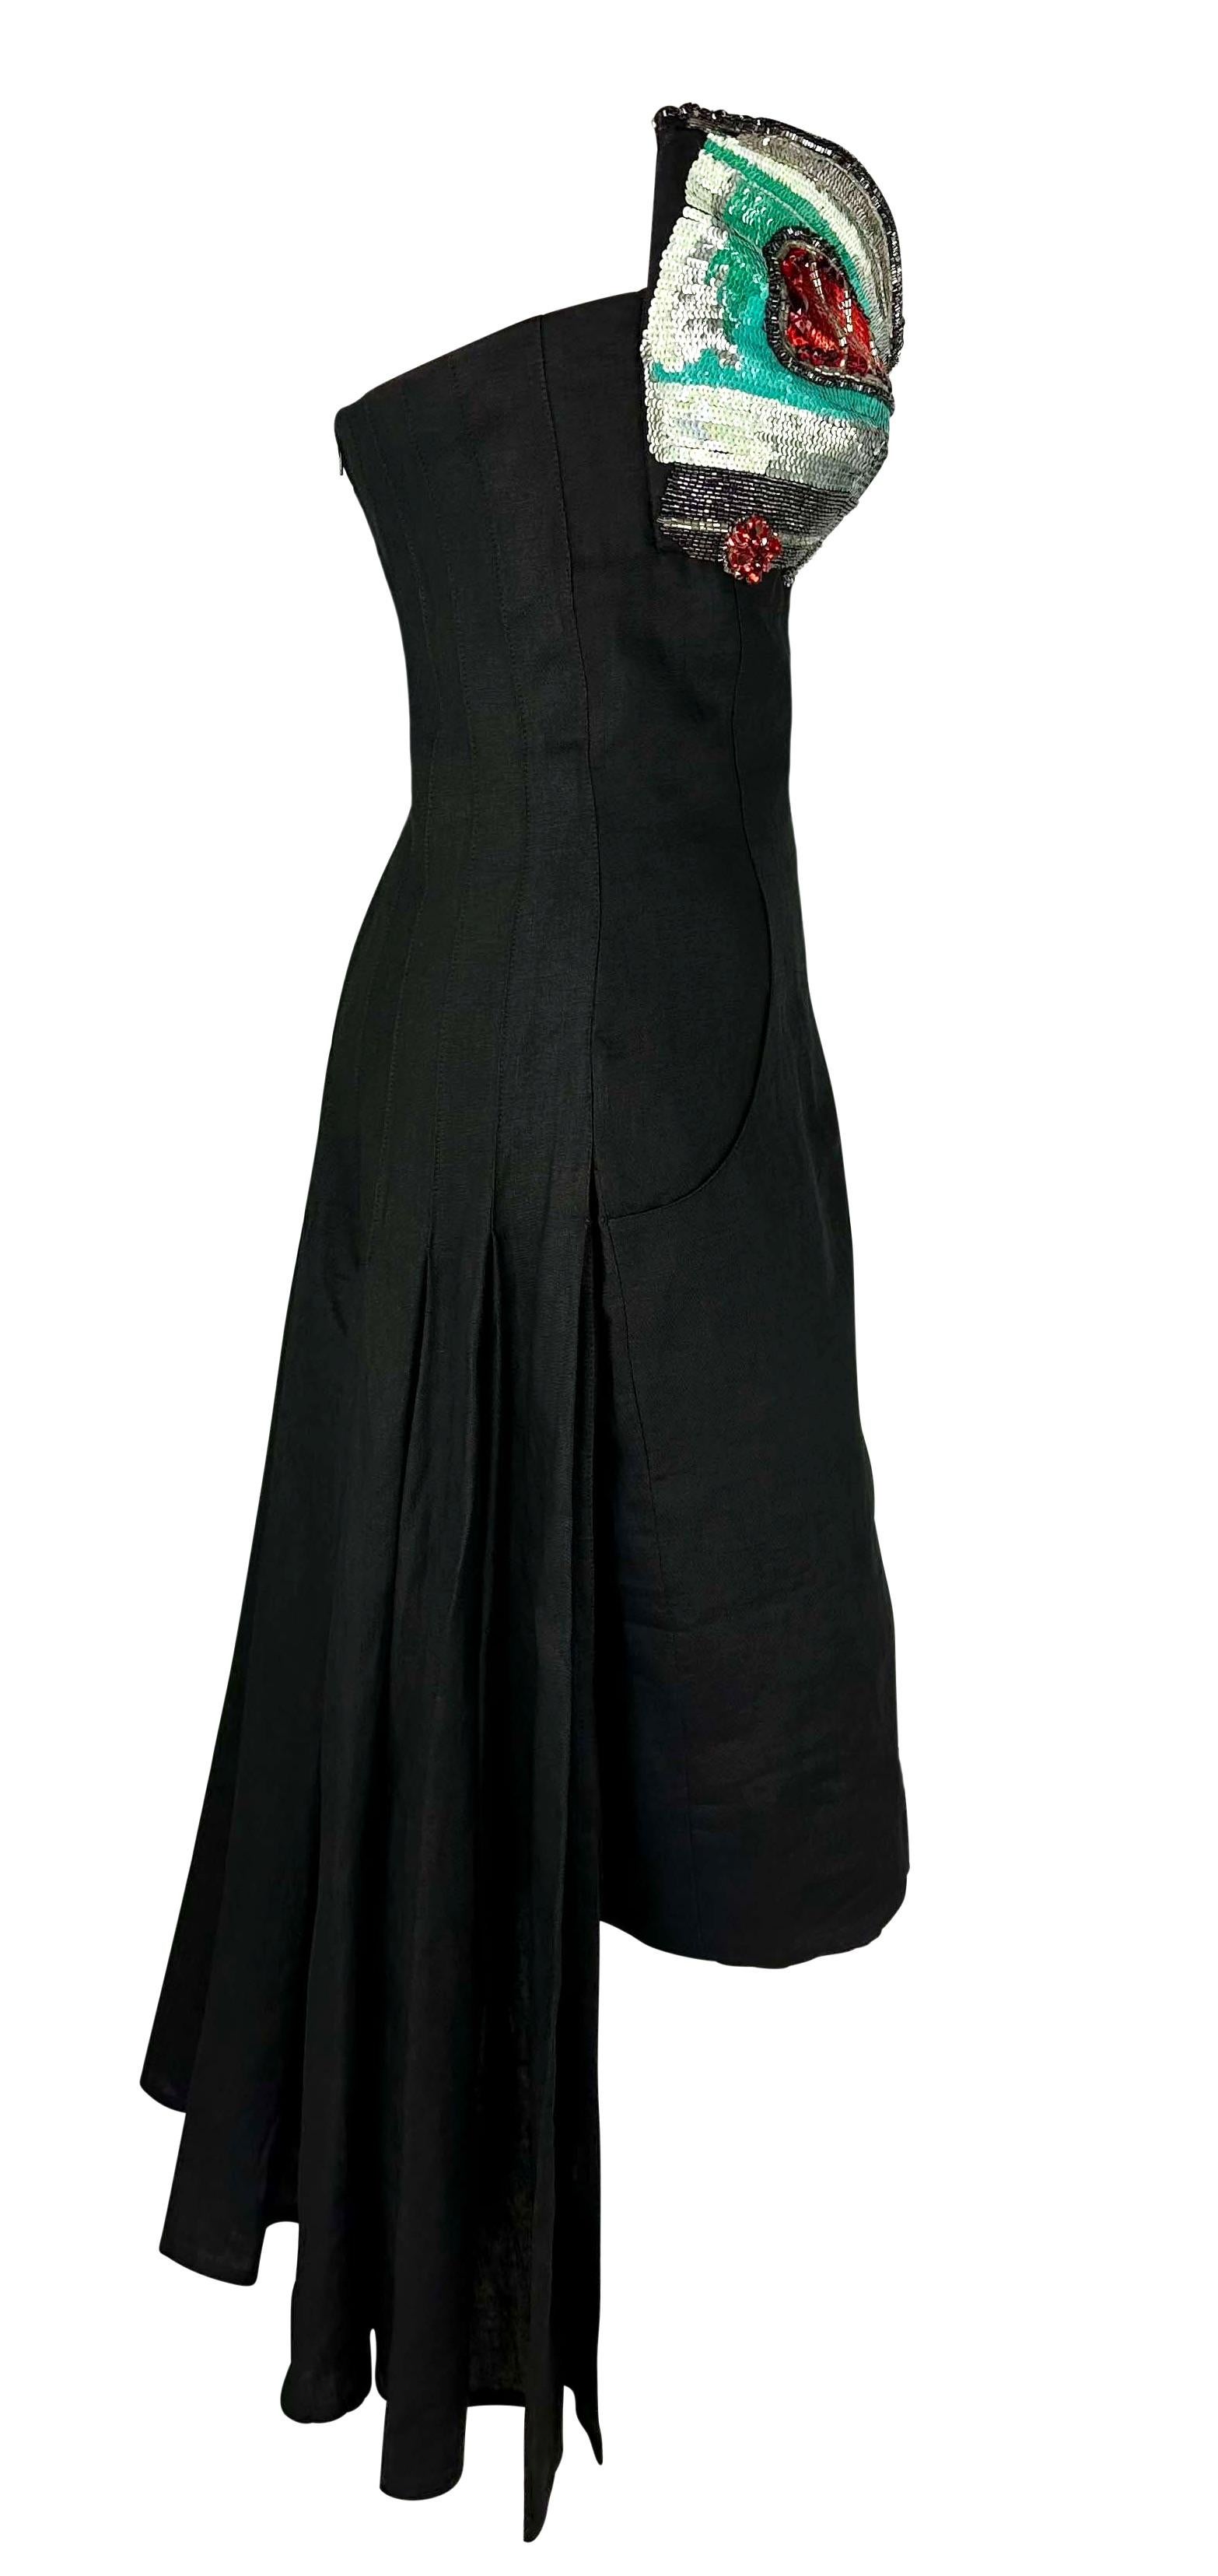 S/S 1987 Karl Lagerfeld Runway  Taillight Rhinestone Sequin Black Dress For Sale 4